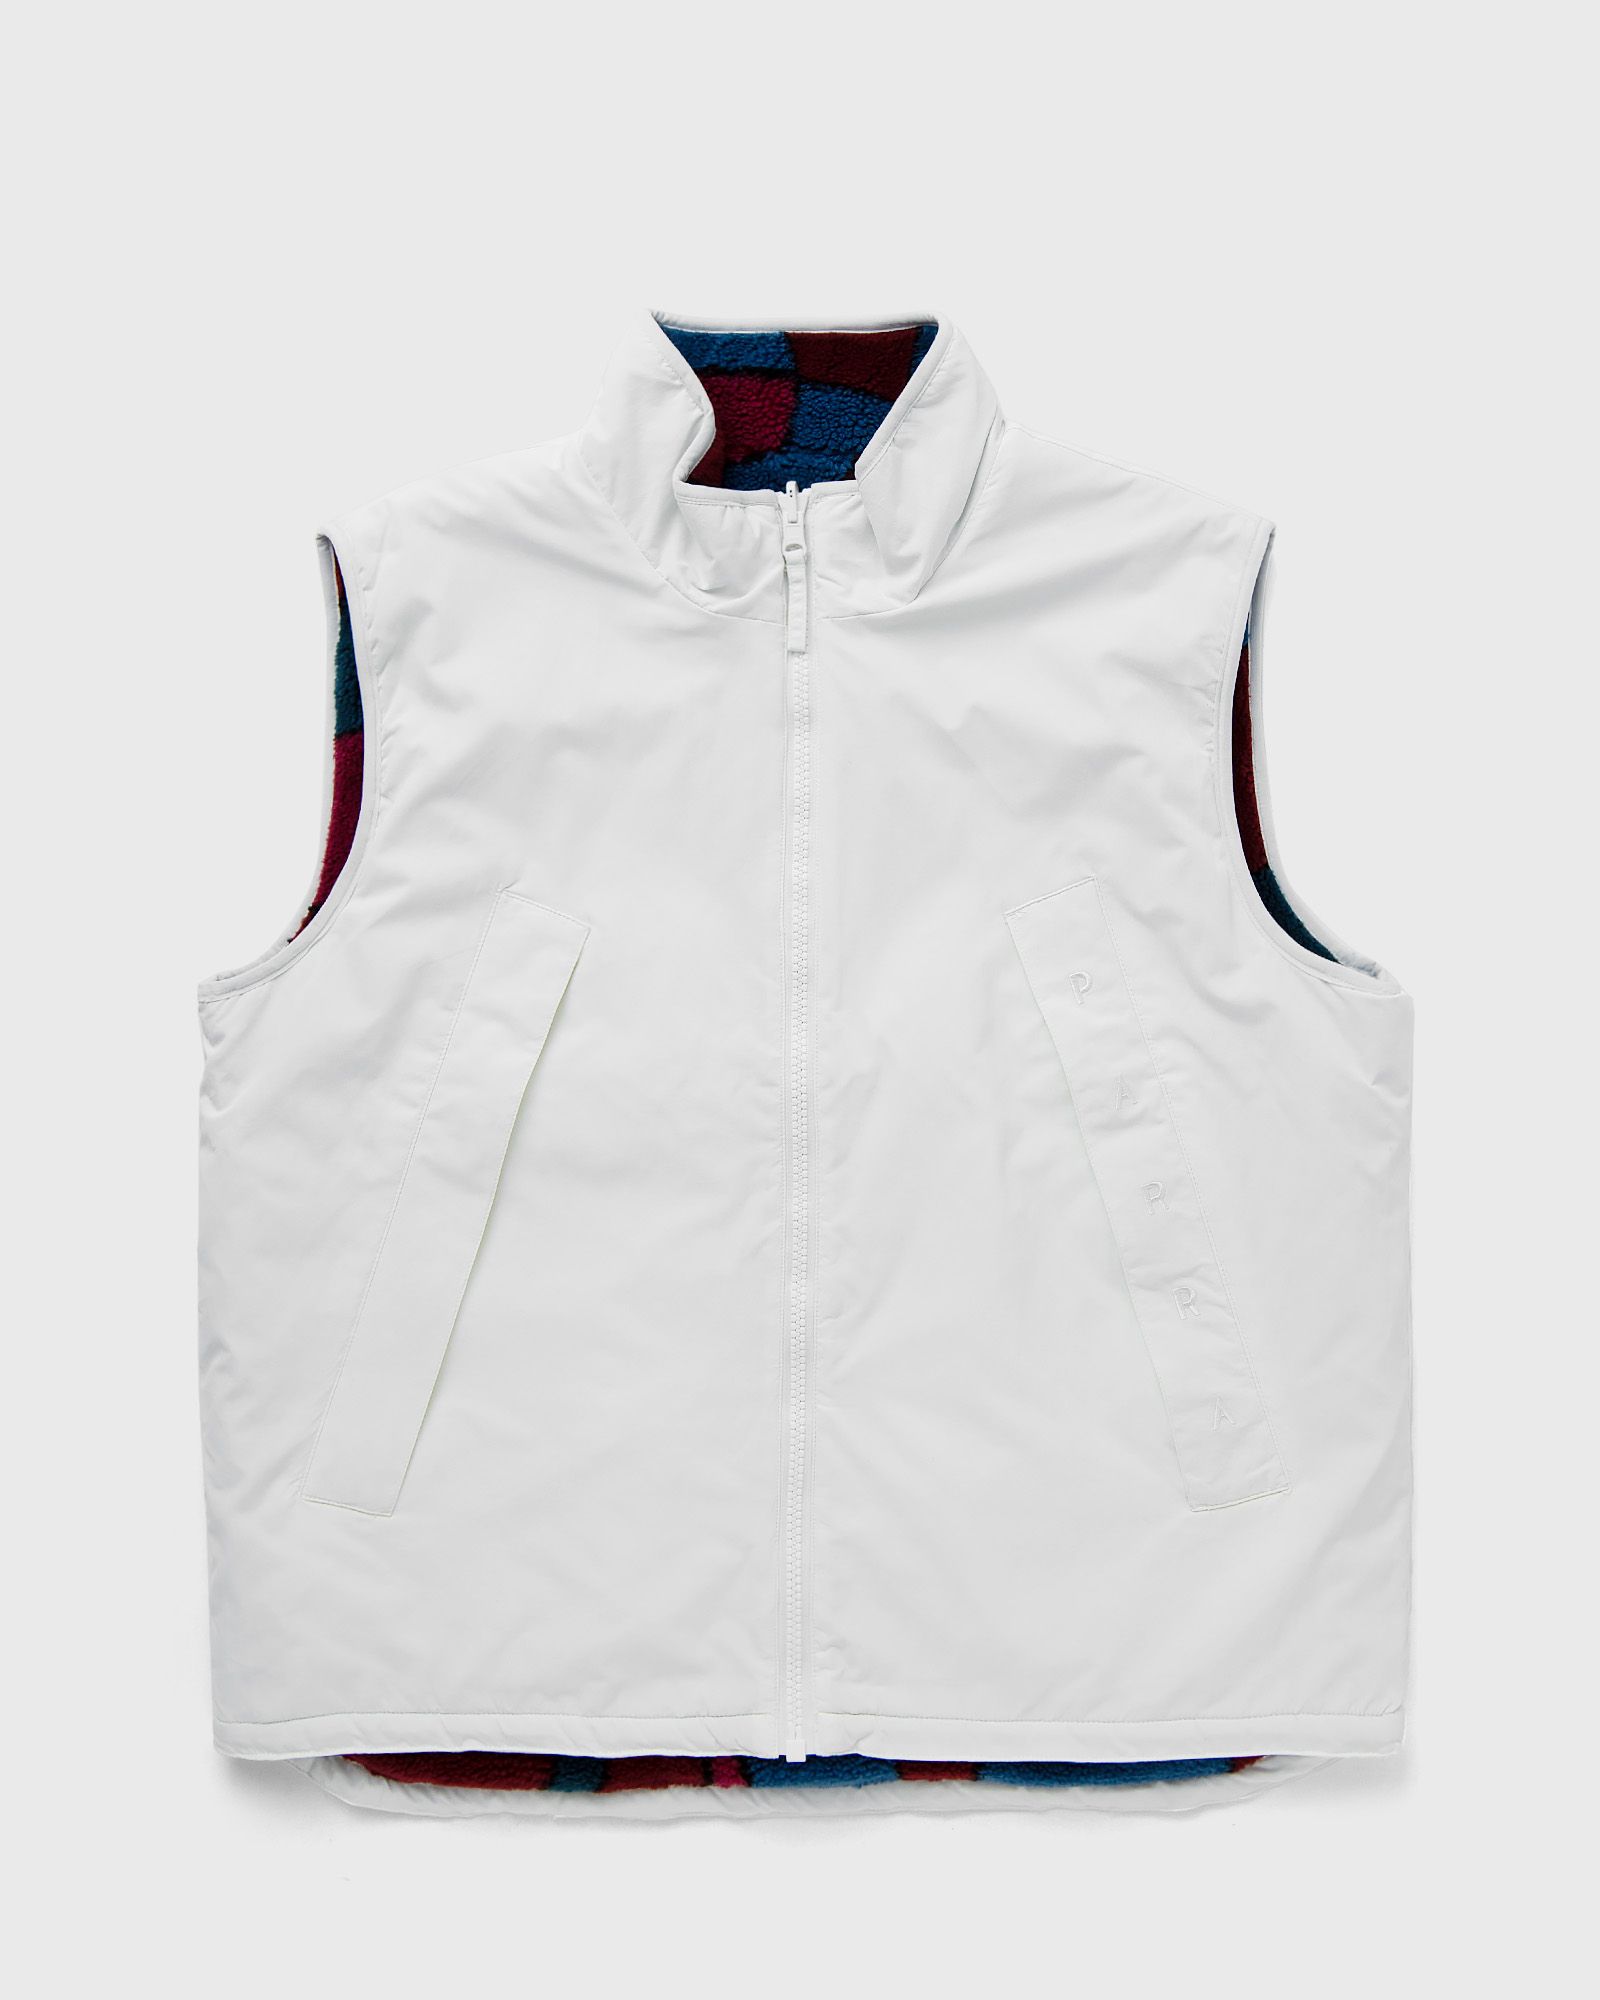 By Parra - trees in wind reversible vest men vests white in größe:xl